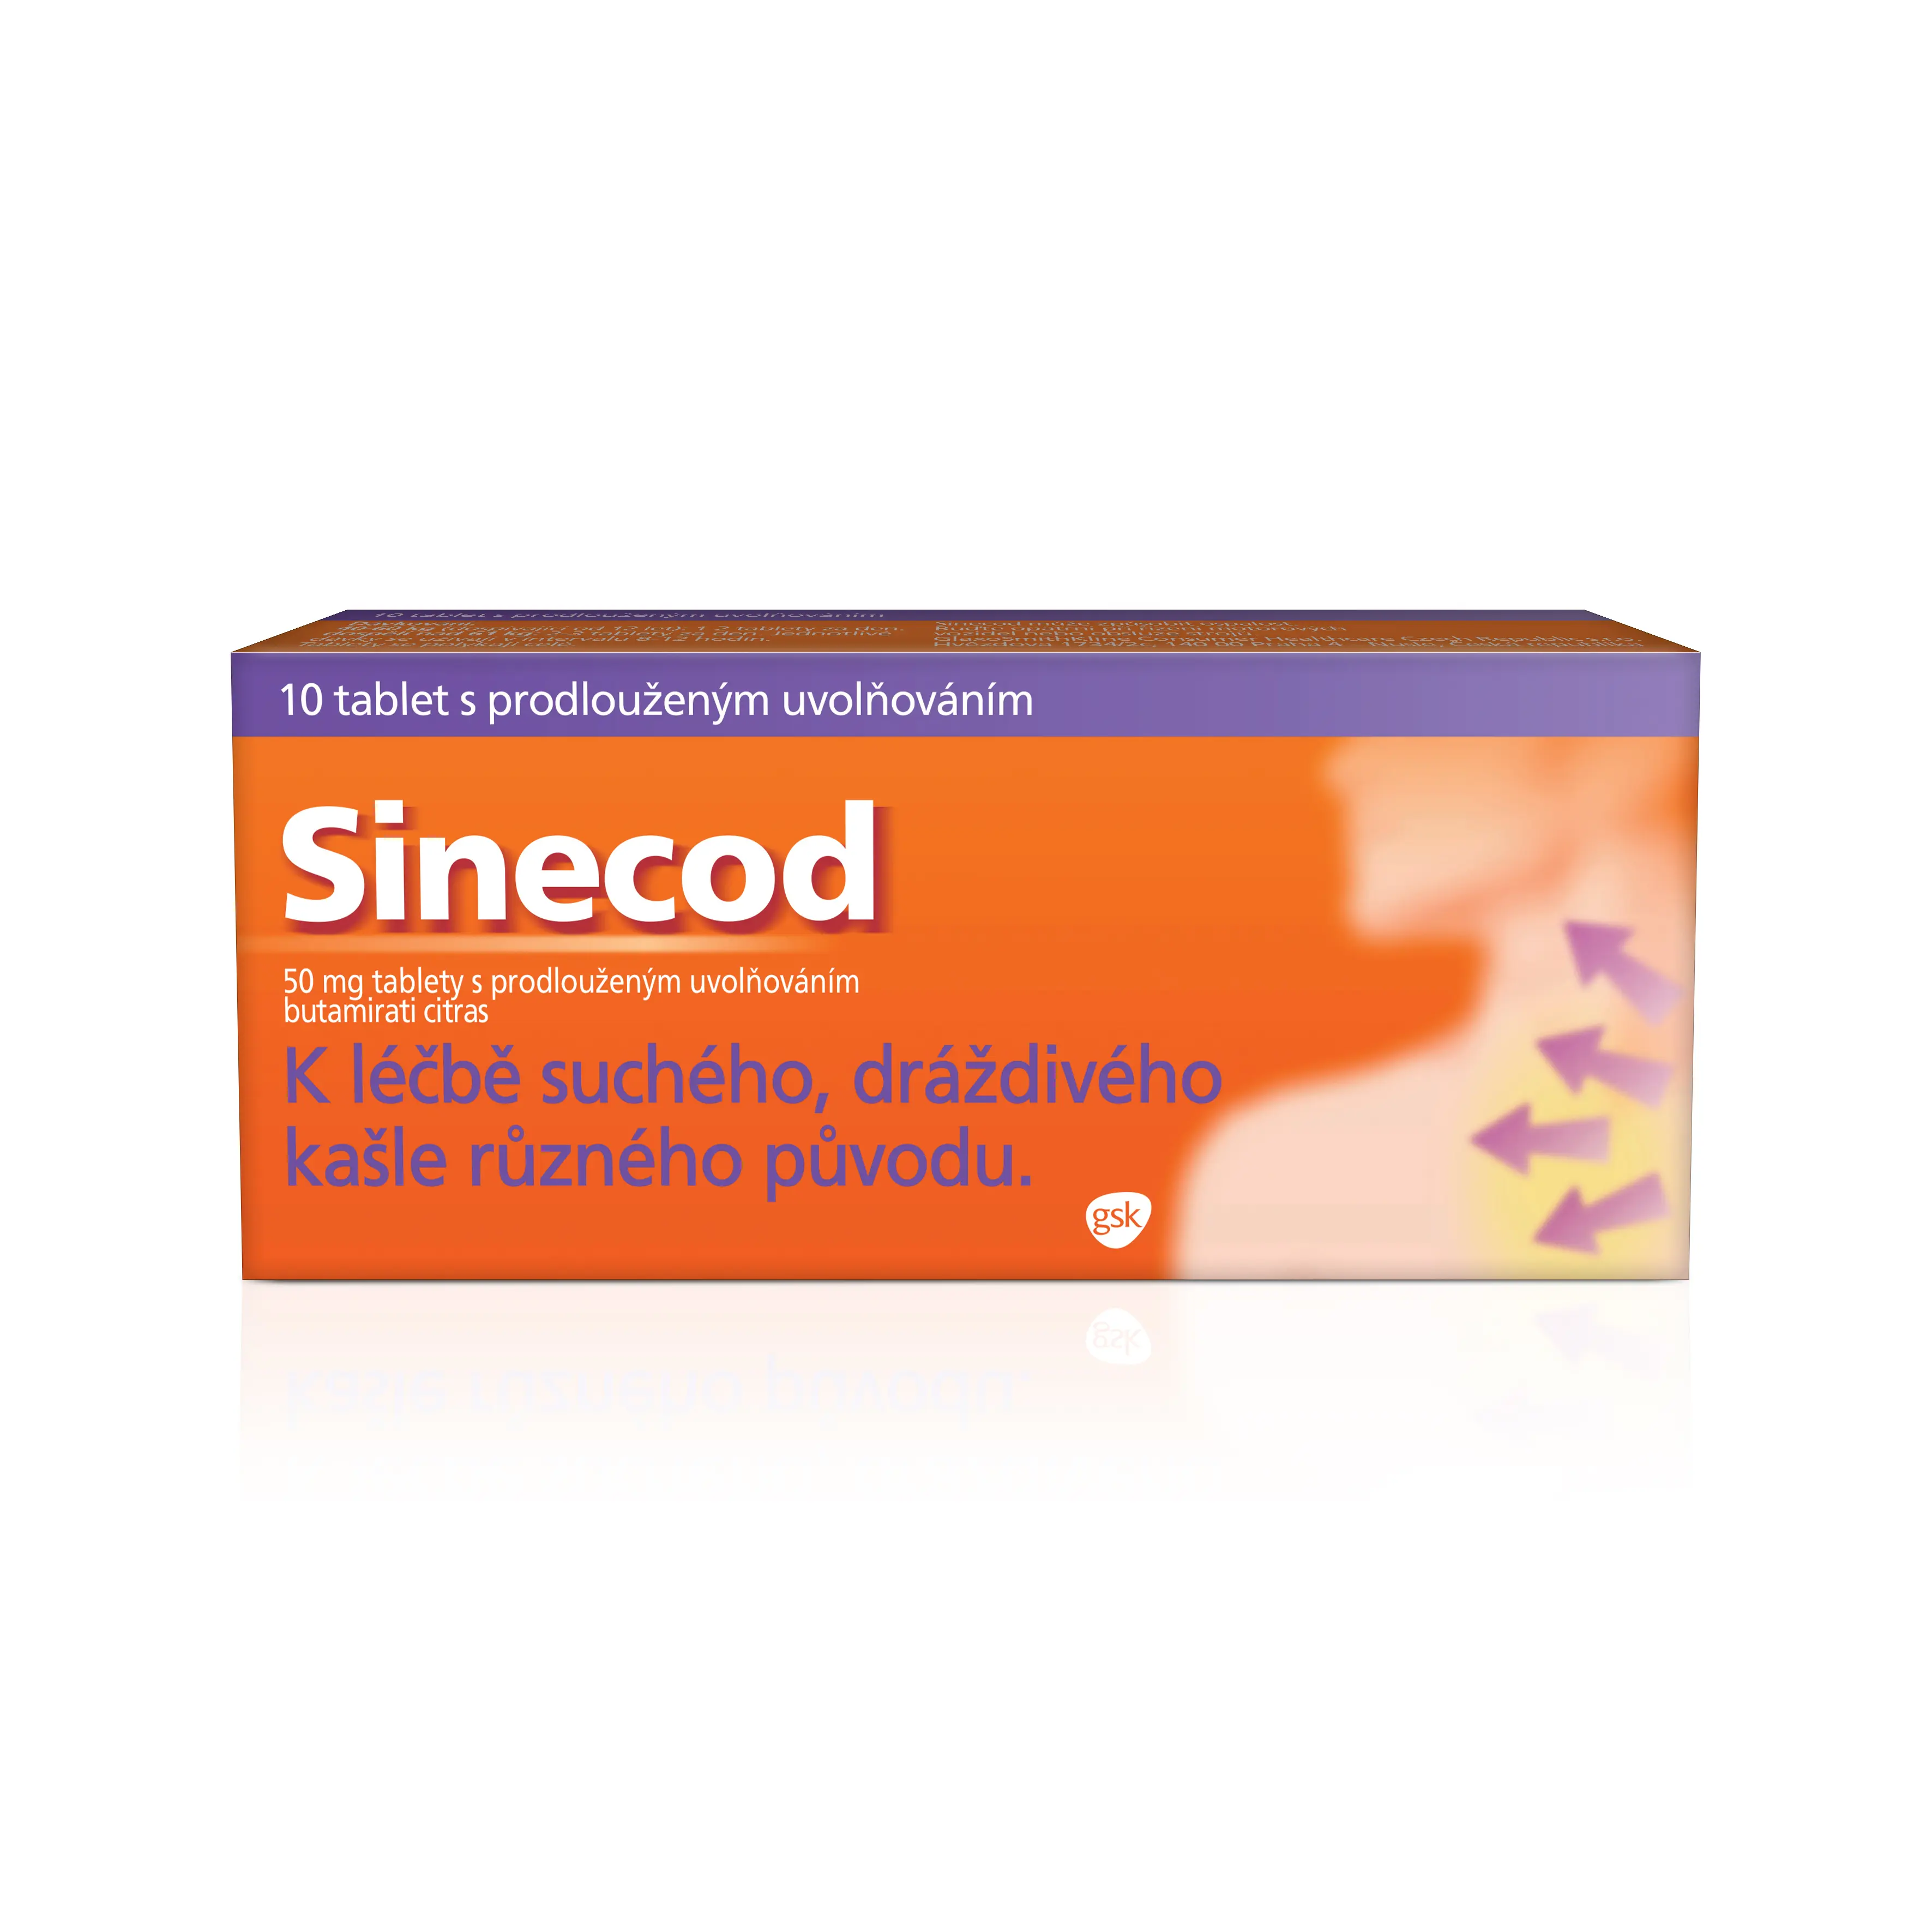 Sinecod 50 mg por.tbl.pro.10